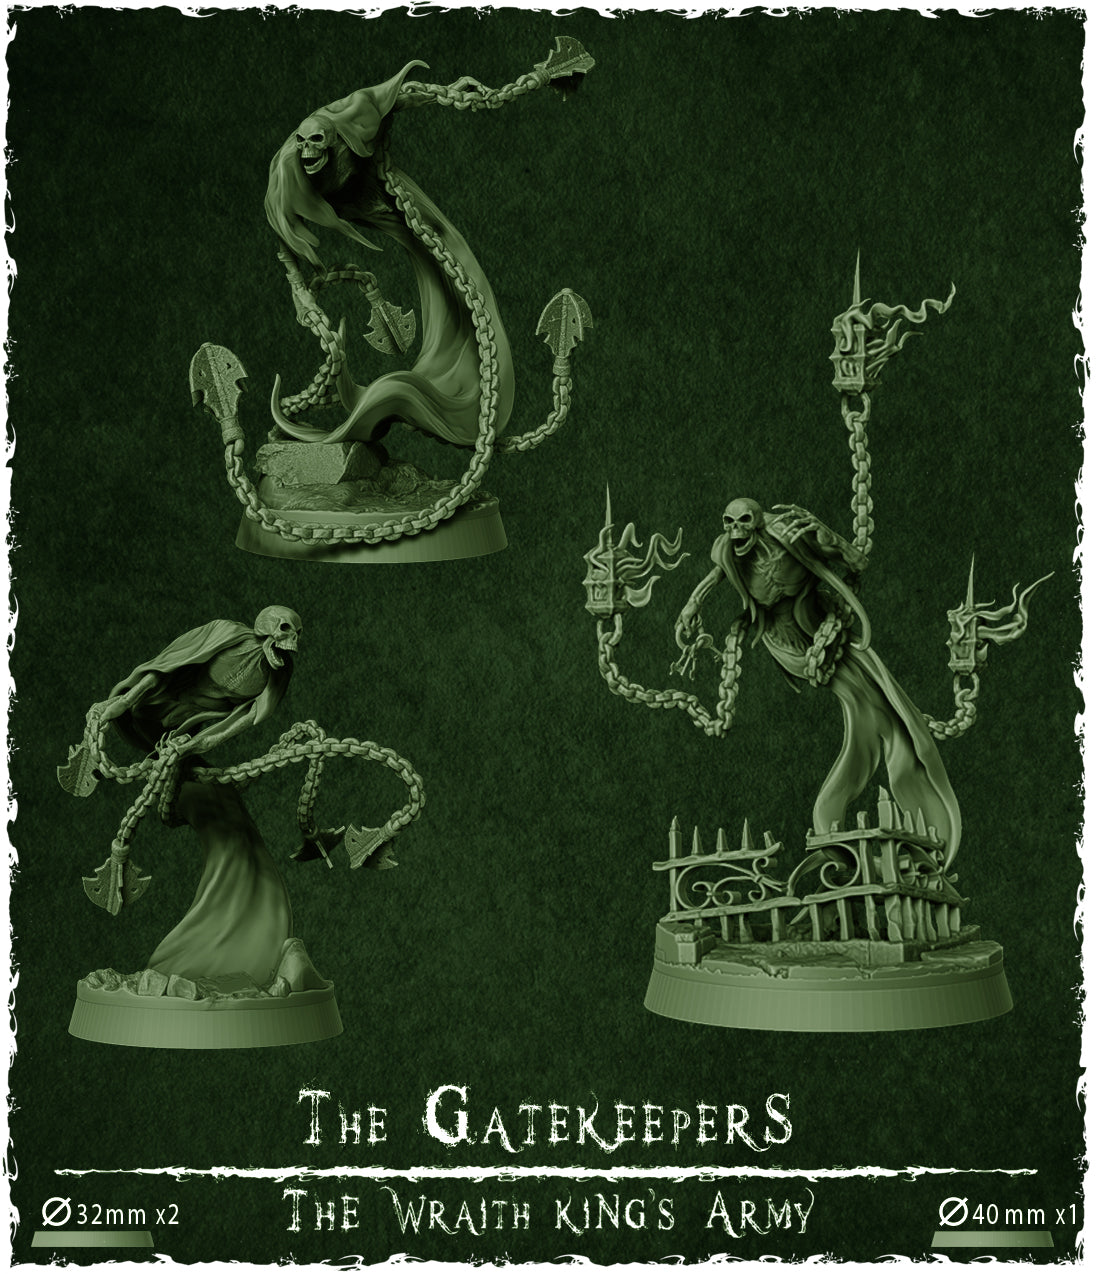 Gatekeepers - complete set